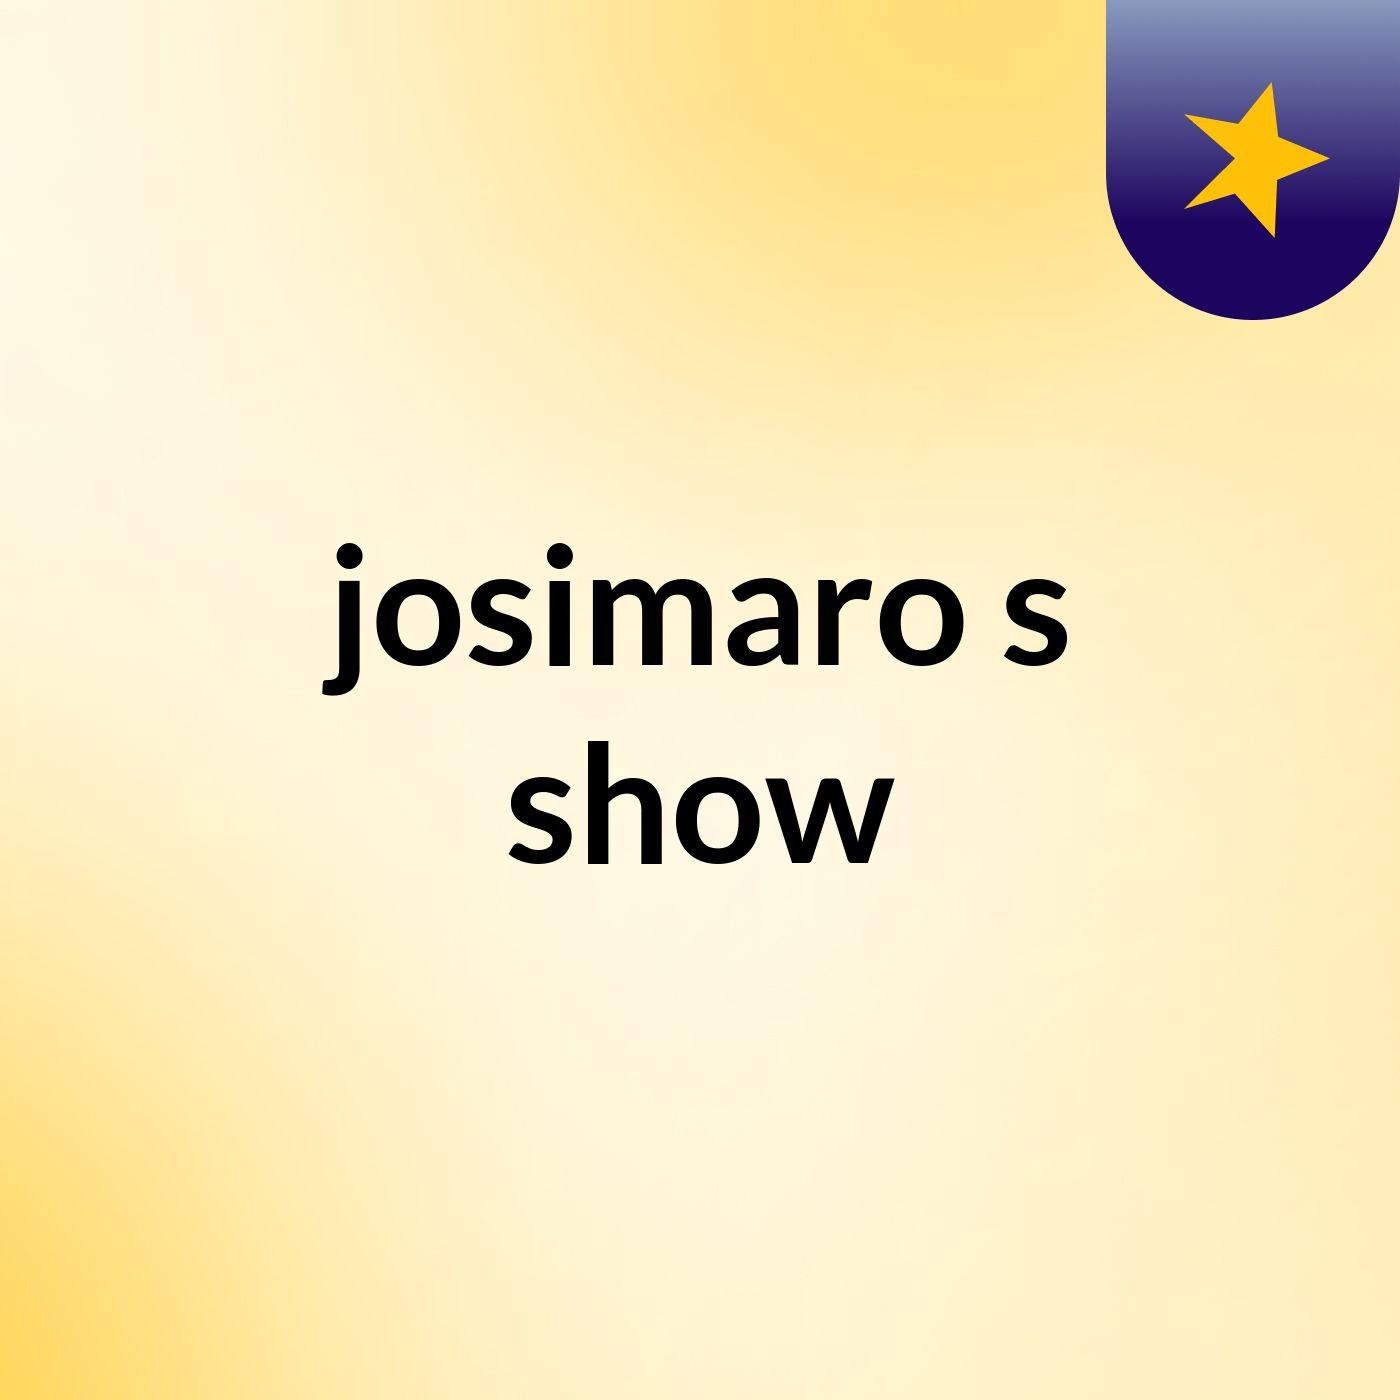 josimaro's show